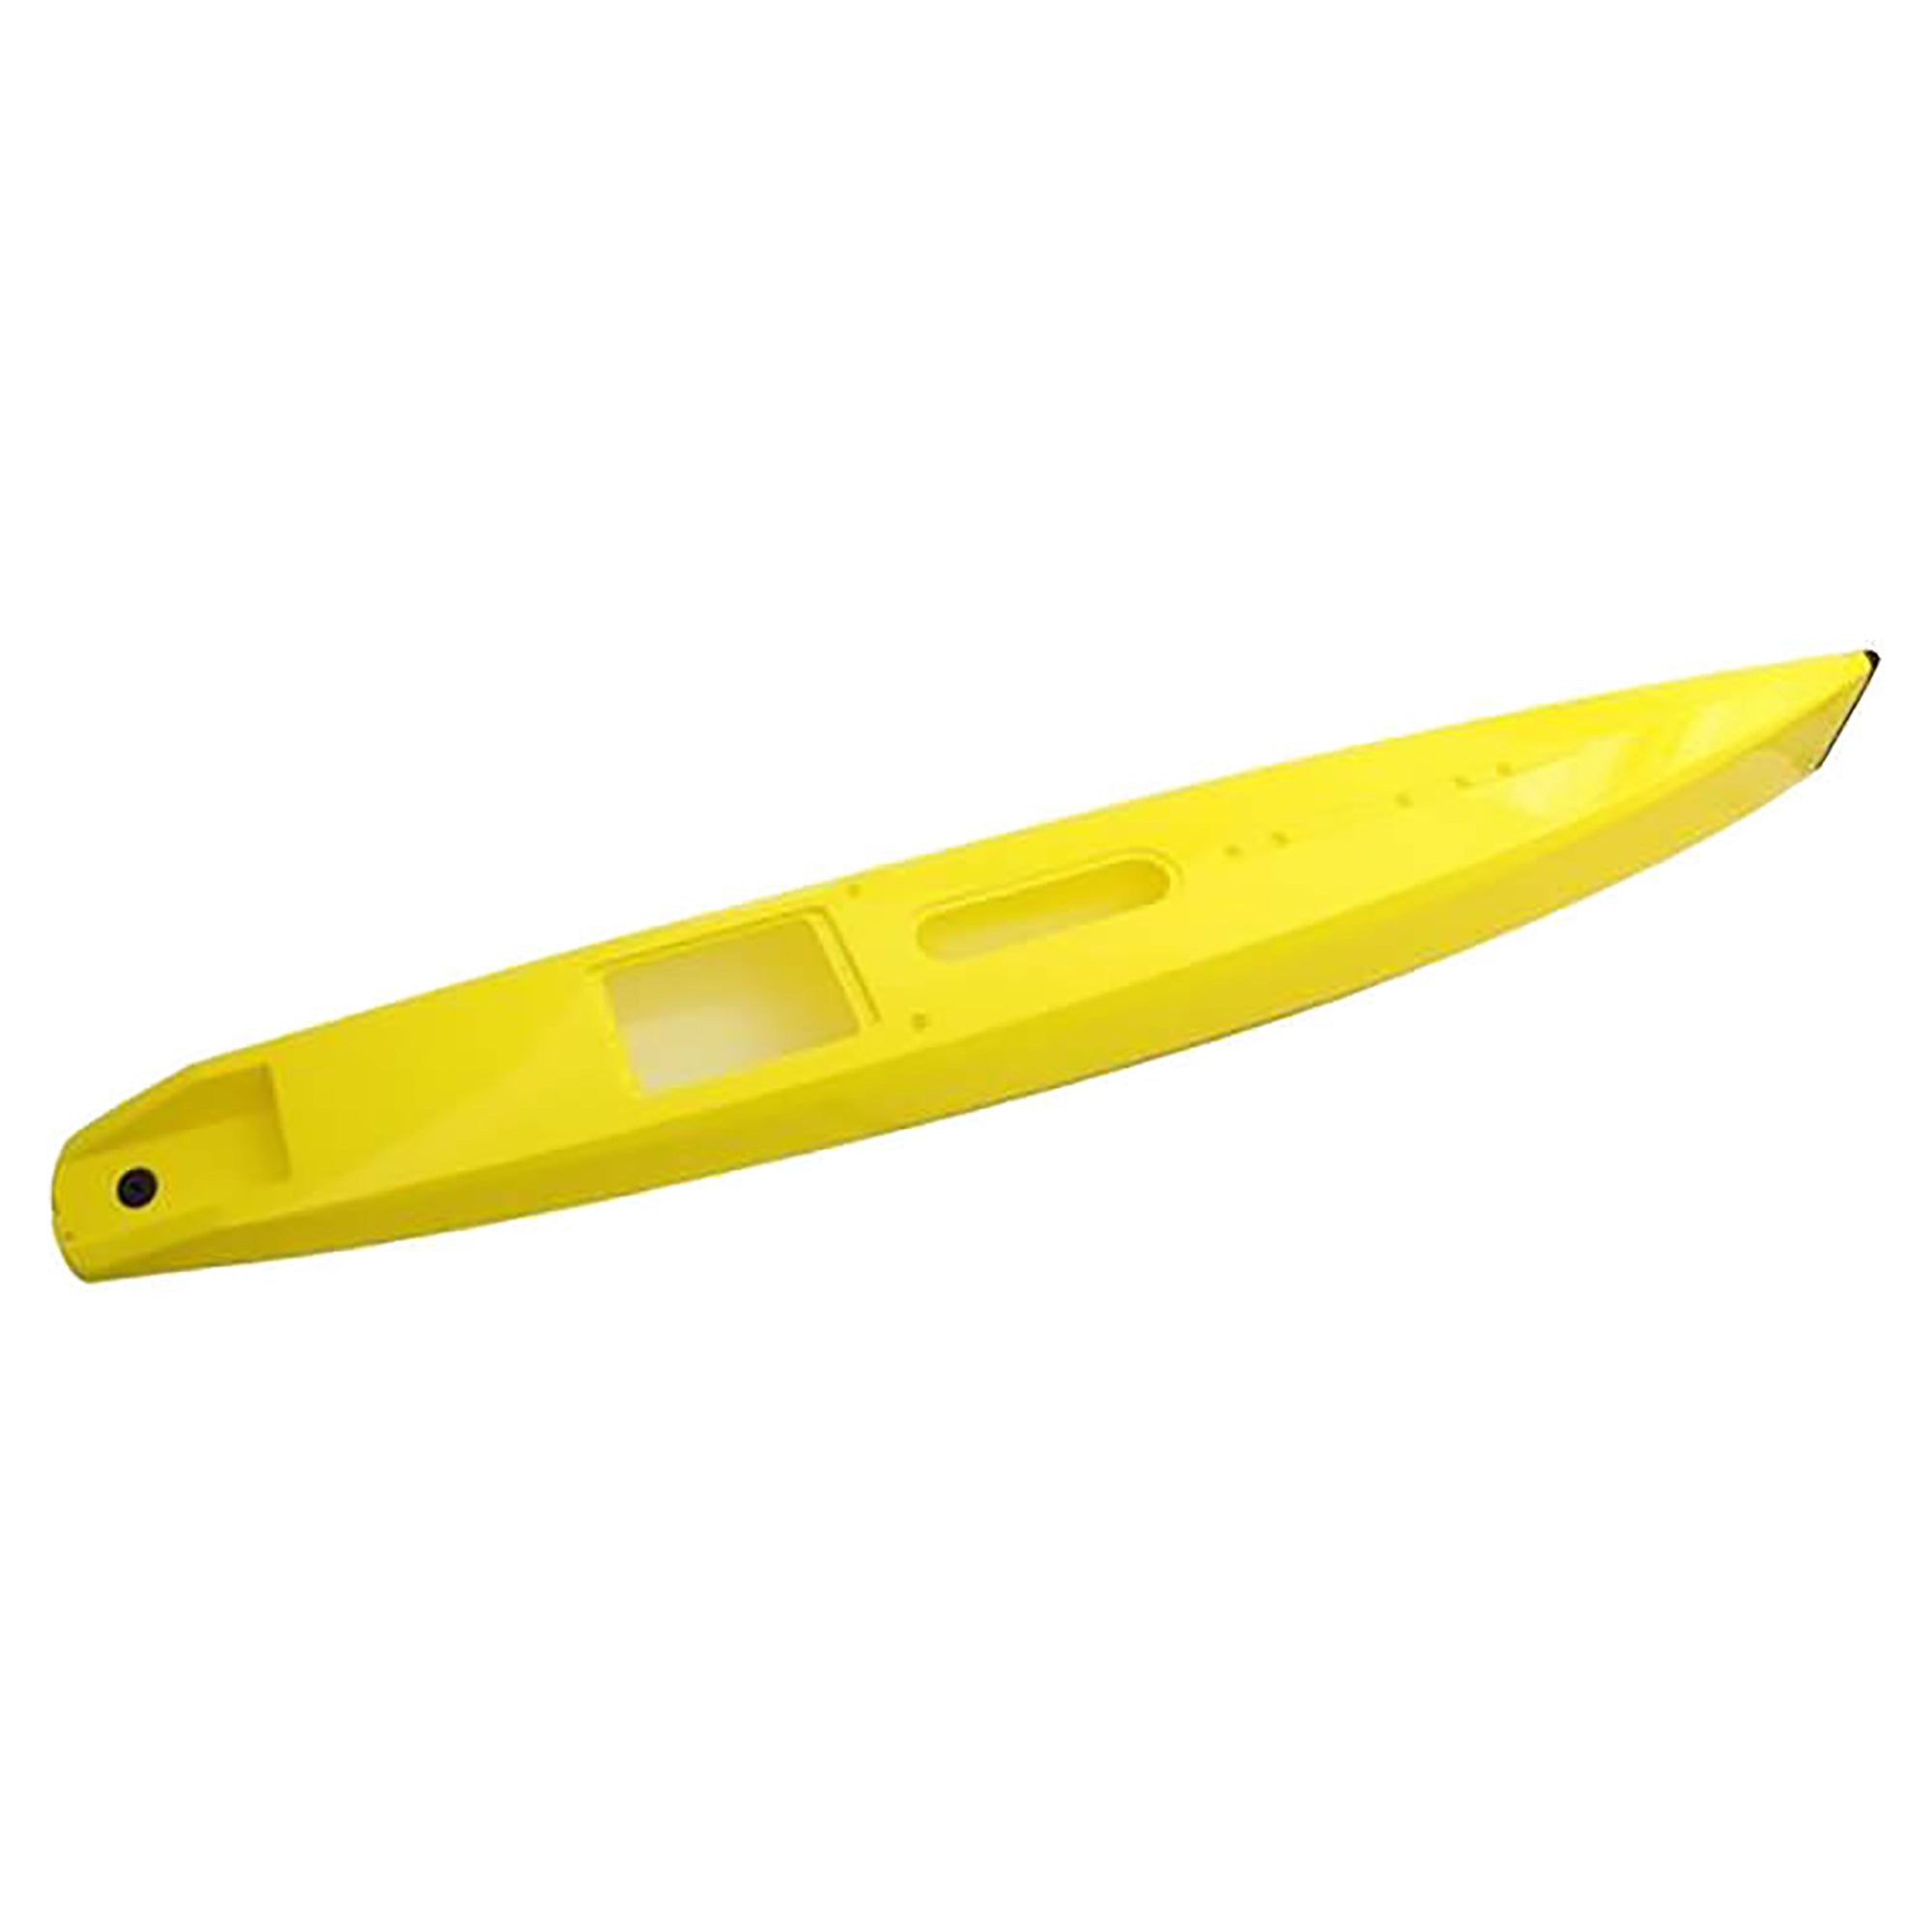 Joysway 881172 DF95 Painted Yellow Hull, Yellow